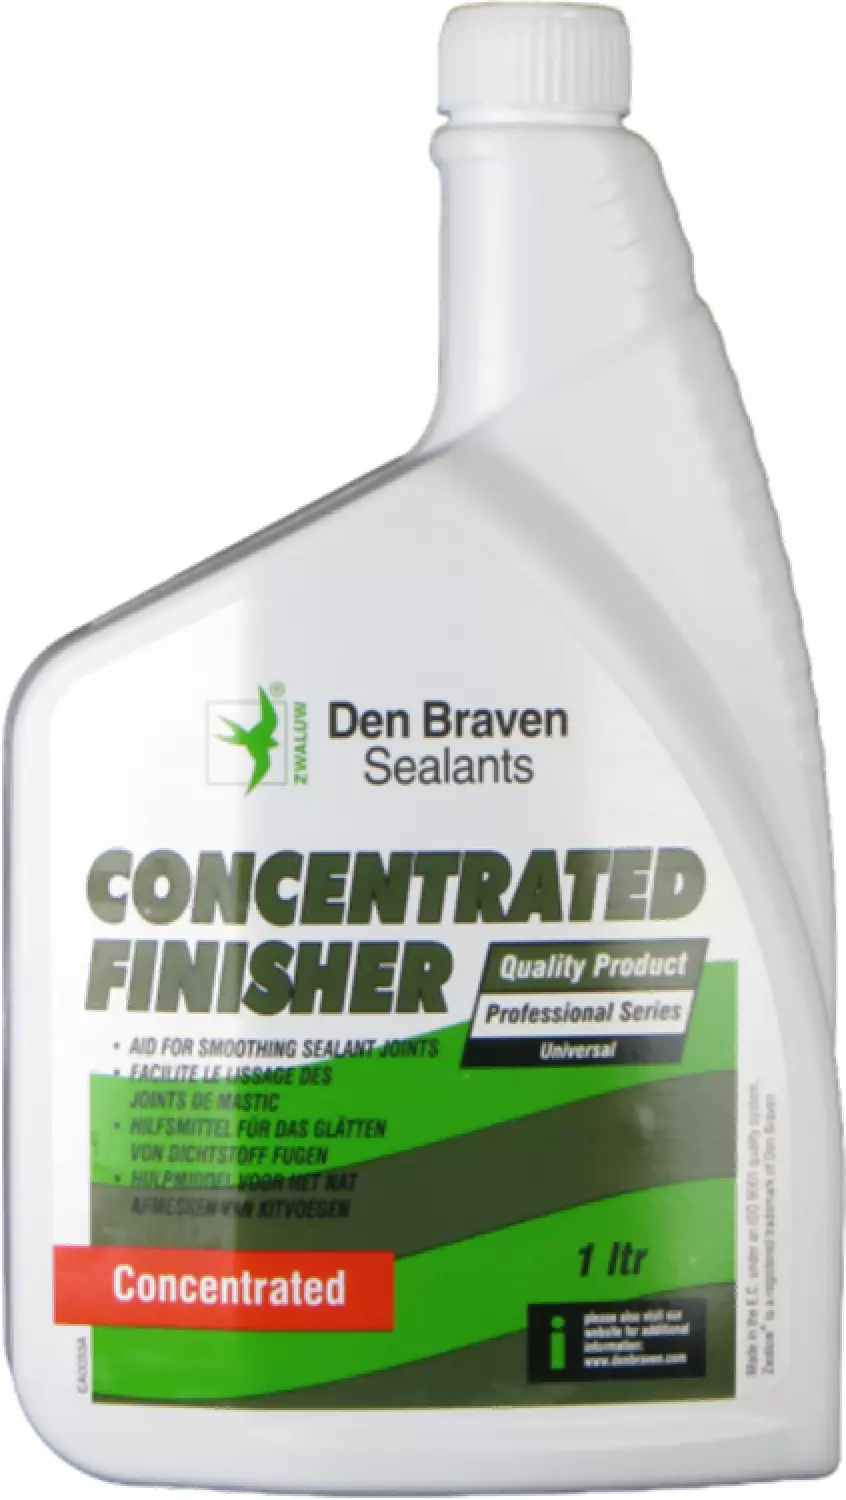 Zwaluw Den Braven Concentrated Finisher fles 1L-image